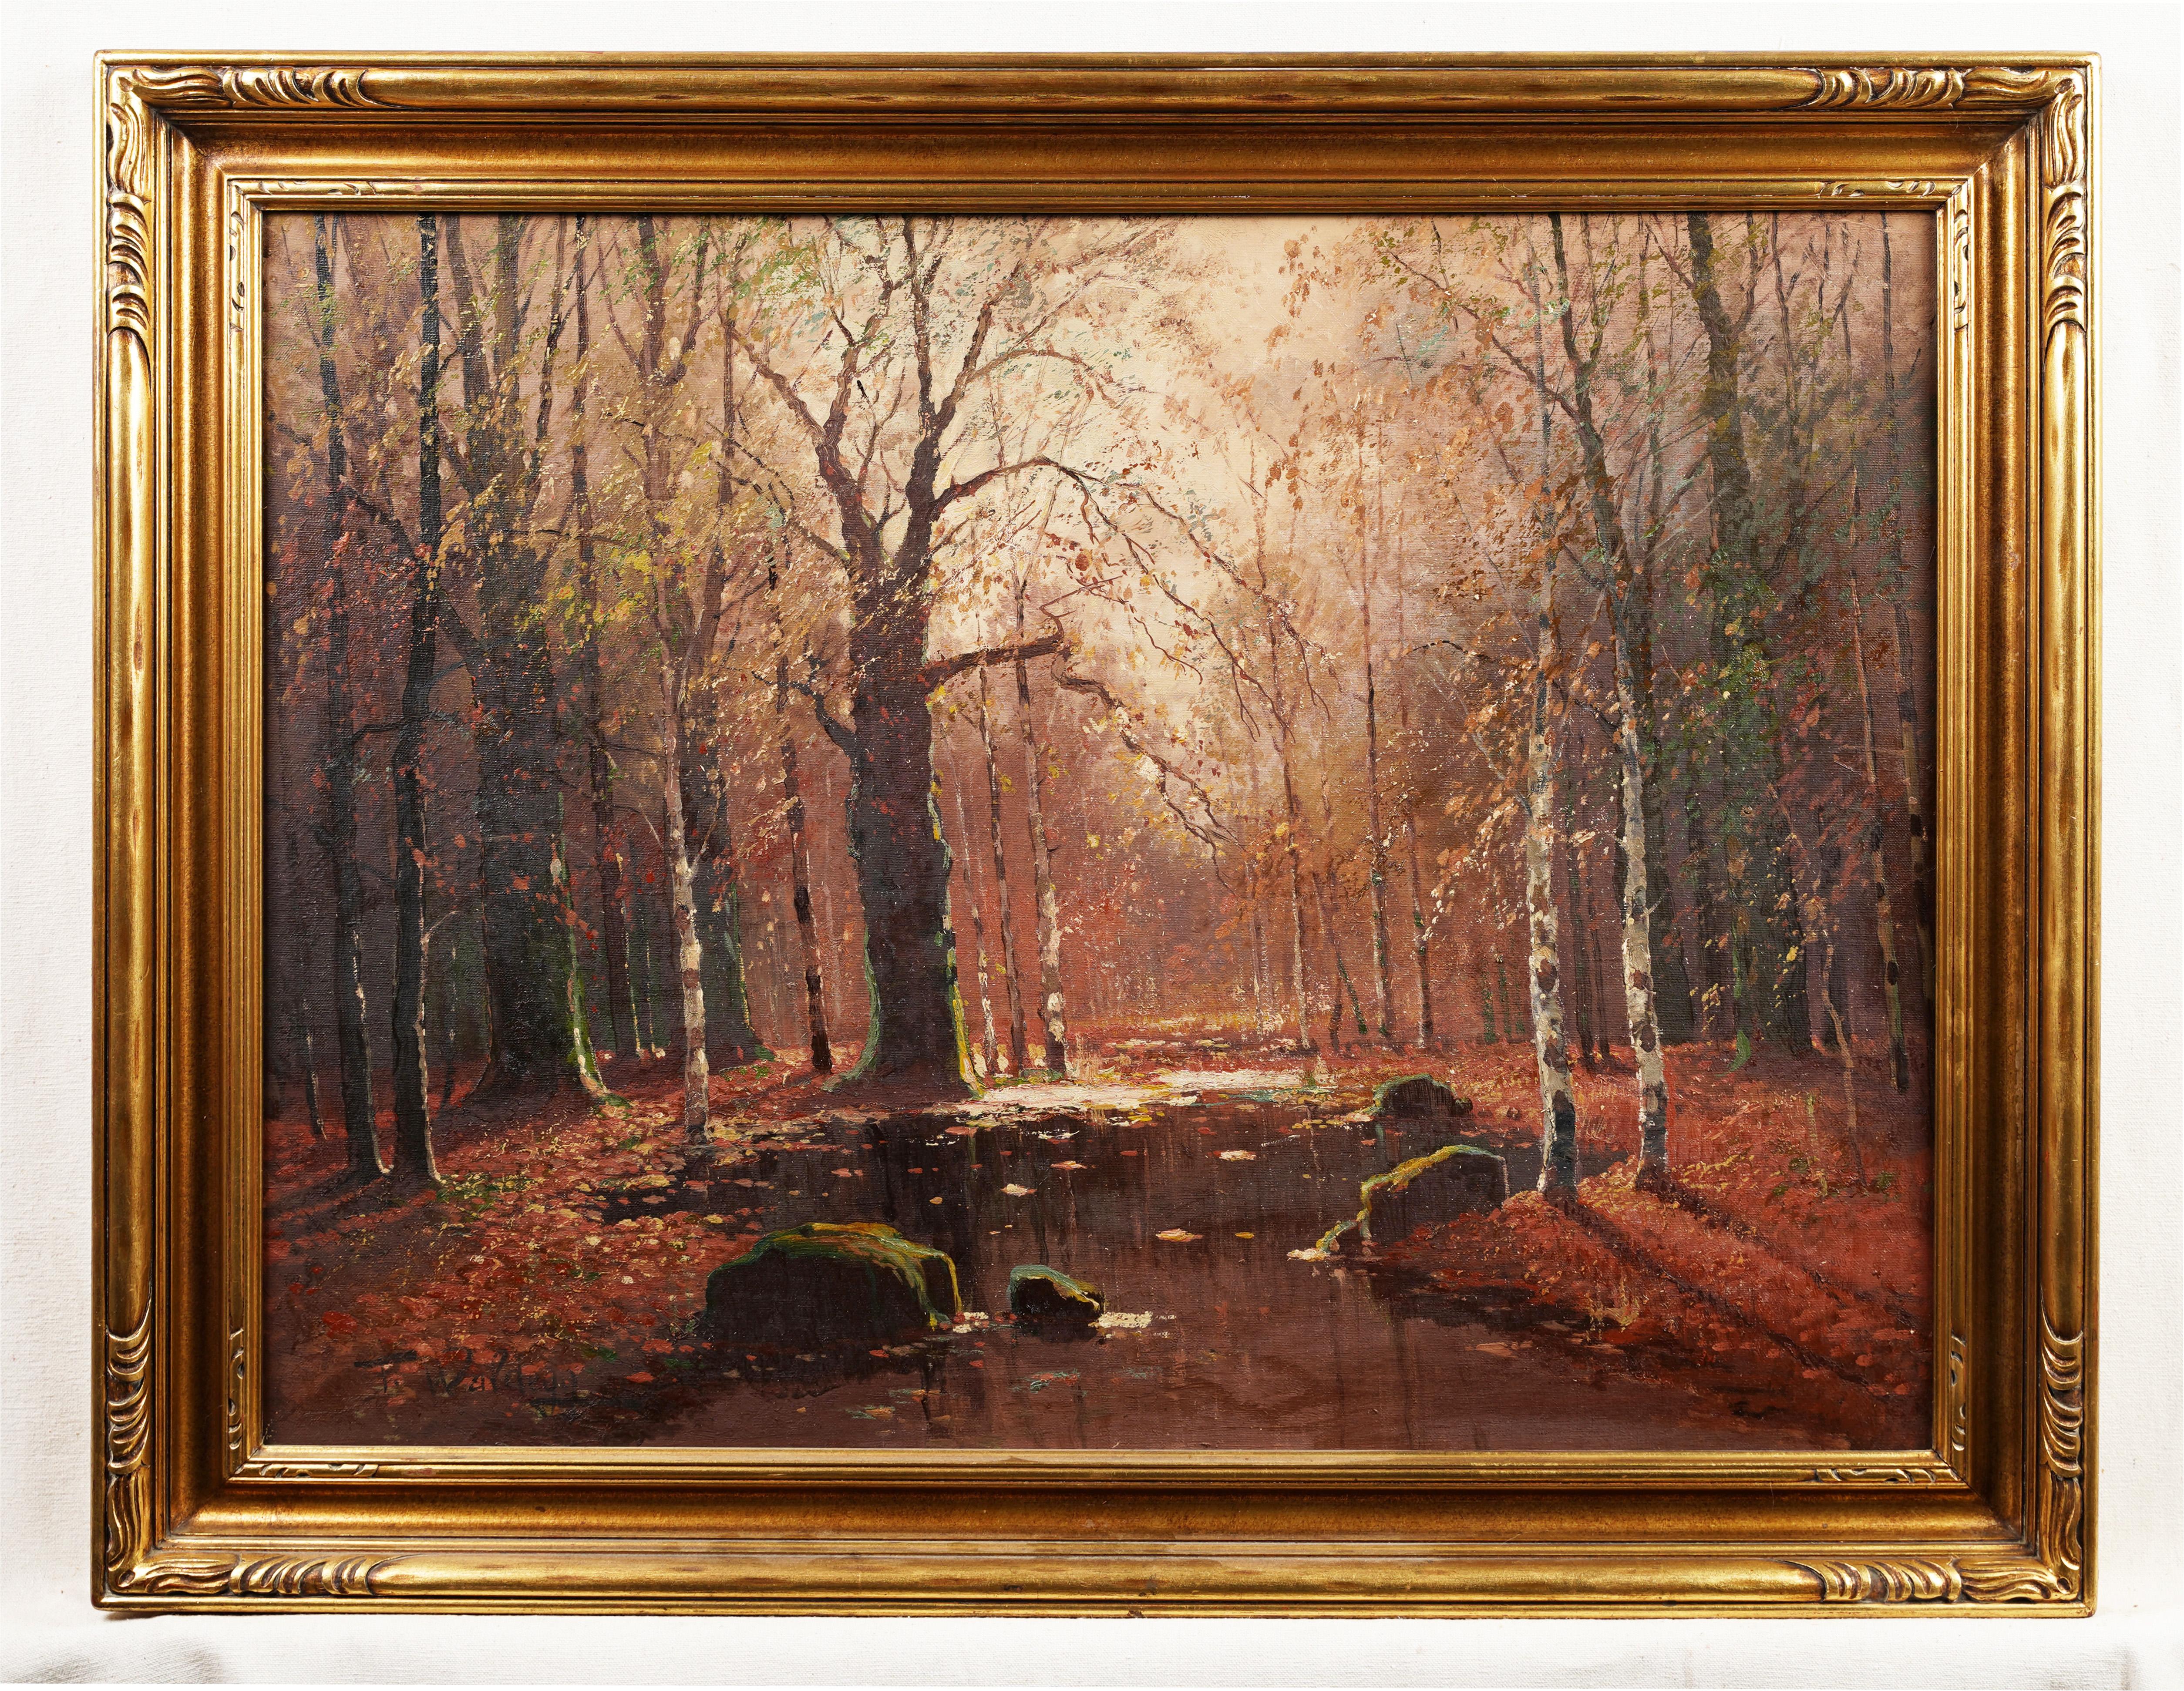 Antique American impressionist signed landscape oil painting.  Oil on canvas.  Signed.  Framed.